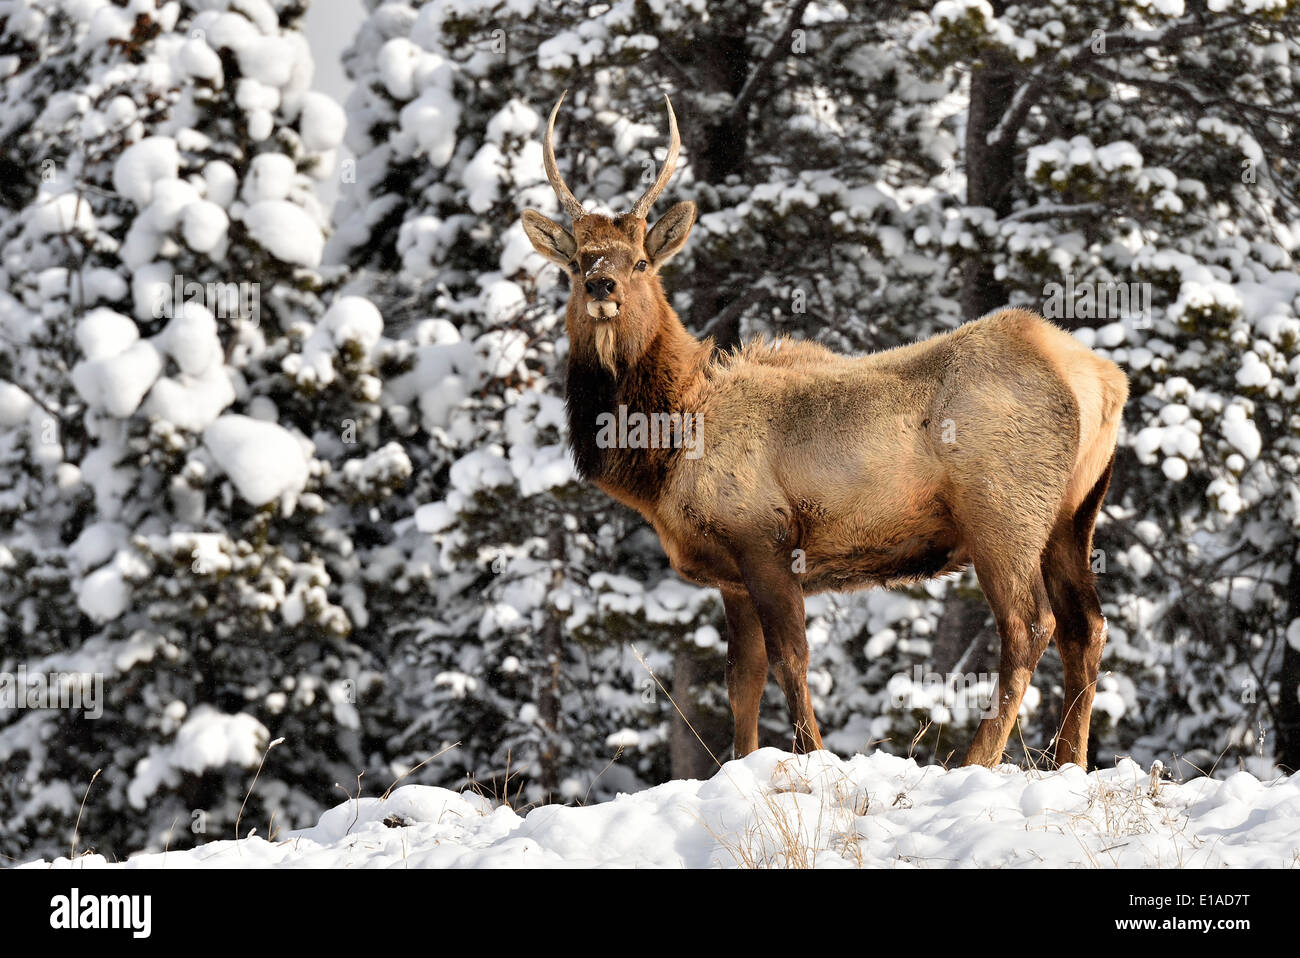 Un toro joven elk de pie sobre una colina cubierta de nieve en su hábitat invernal Foto de stock